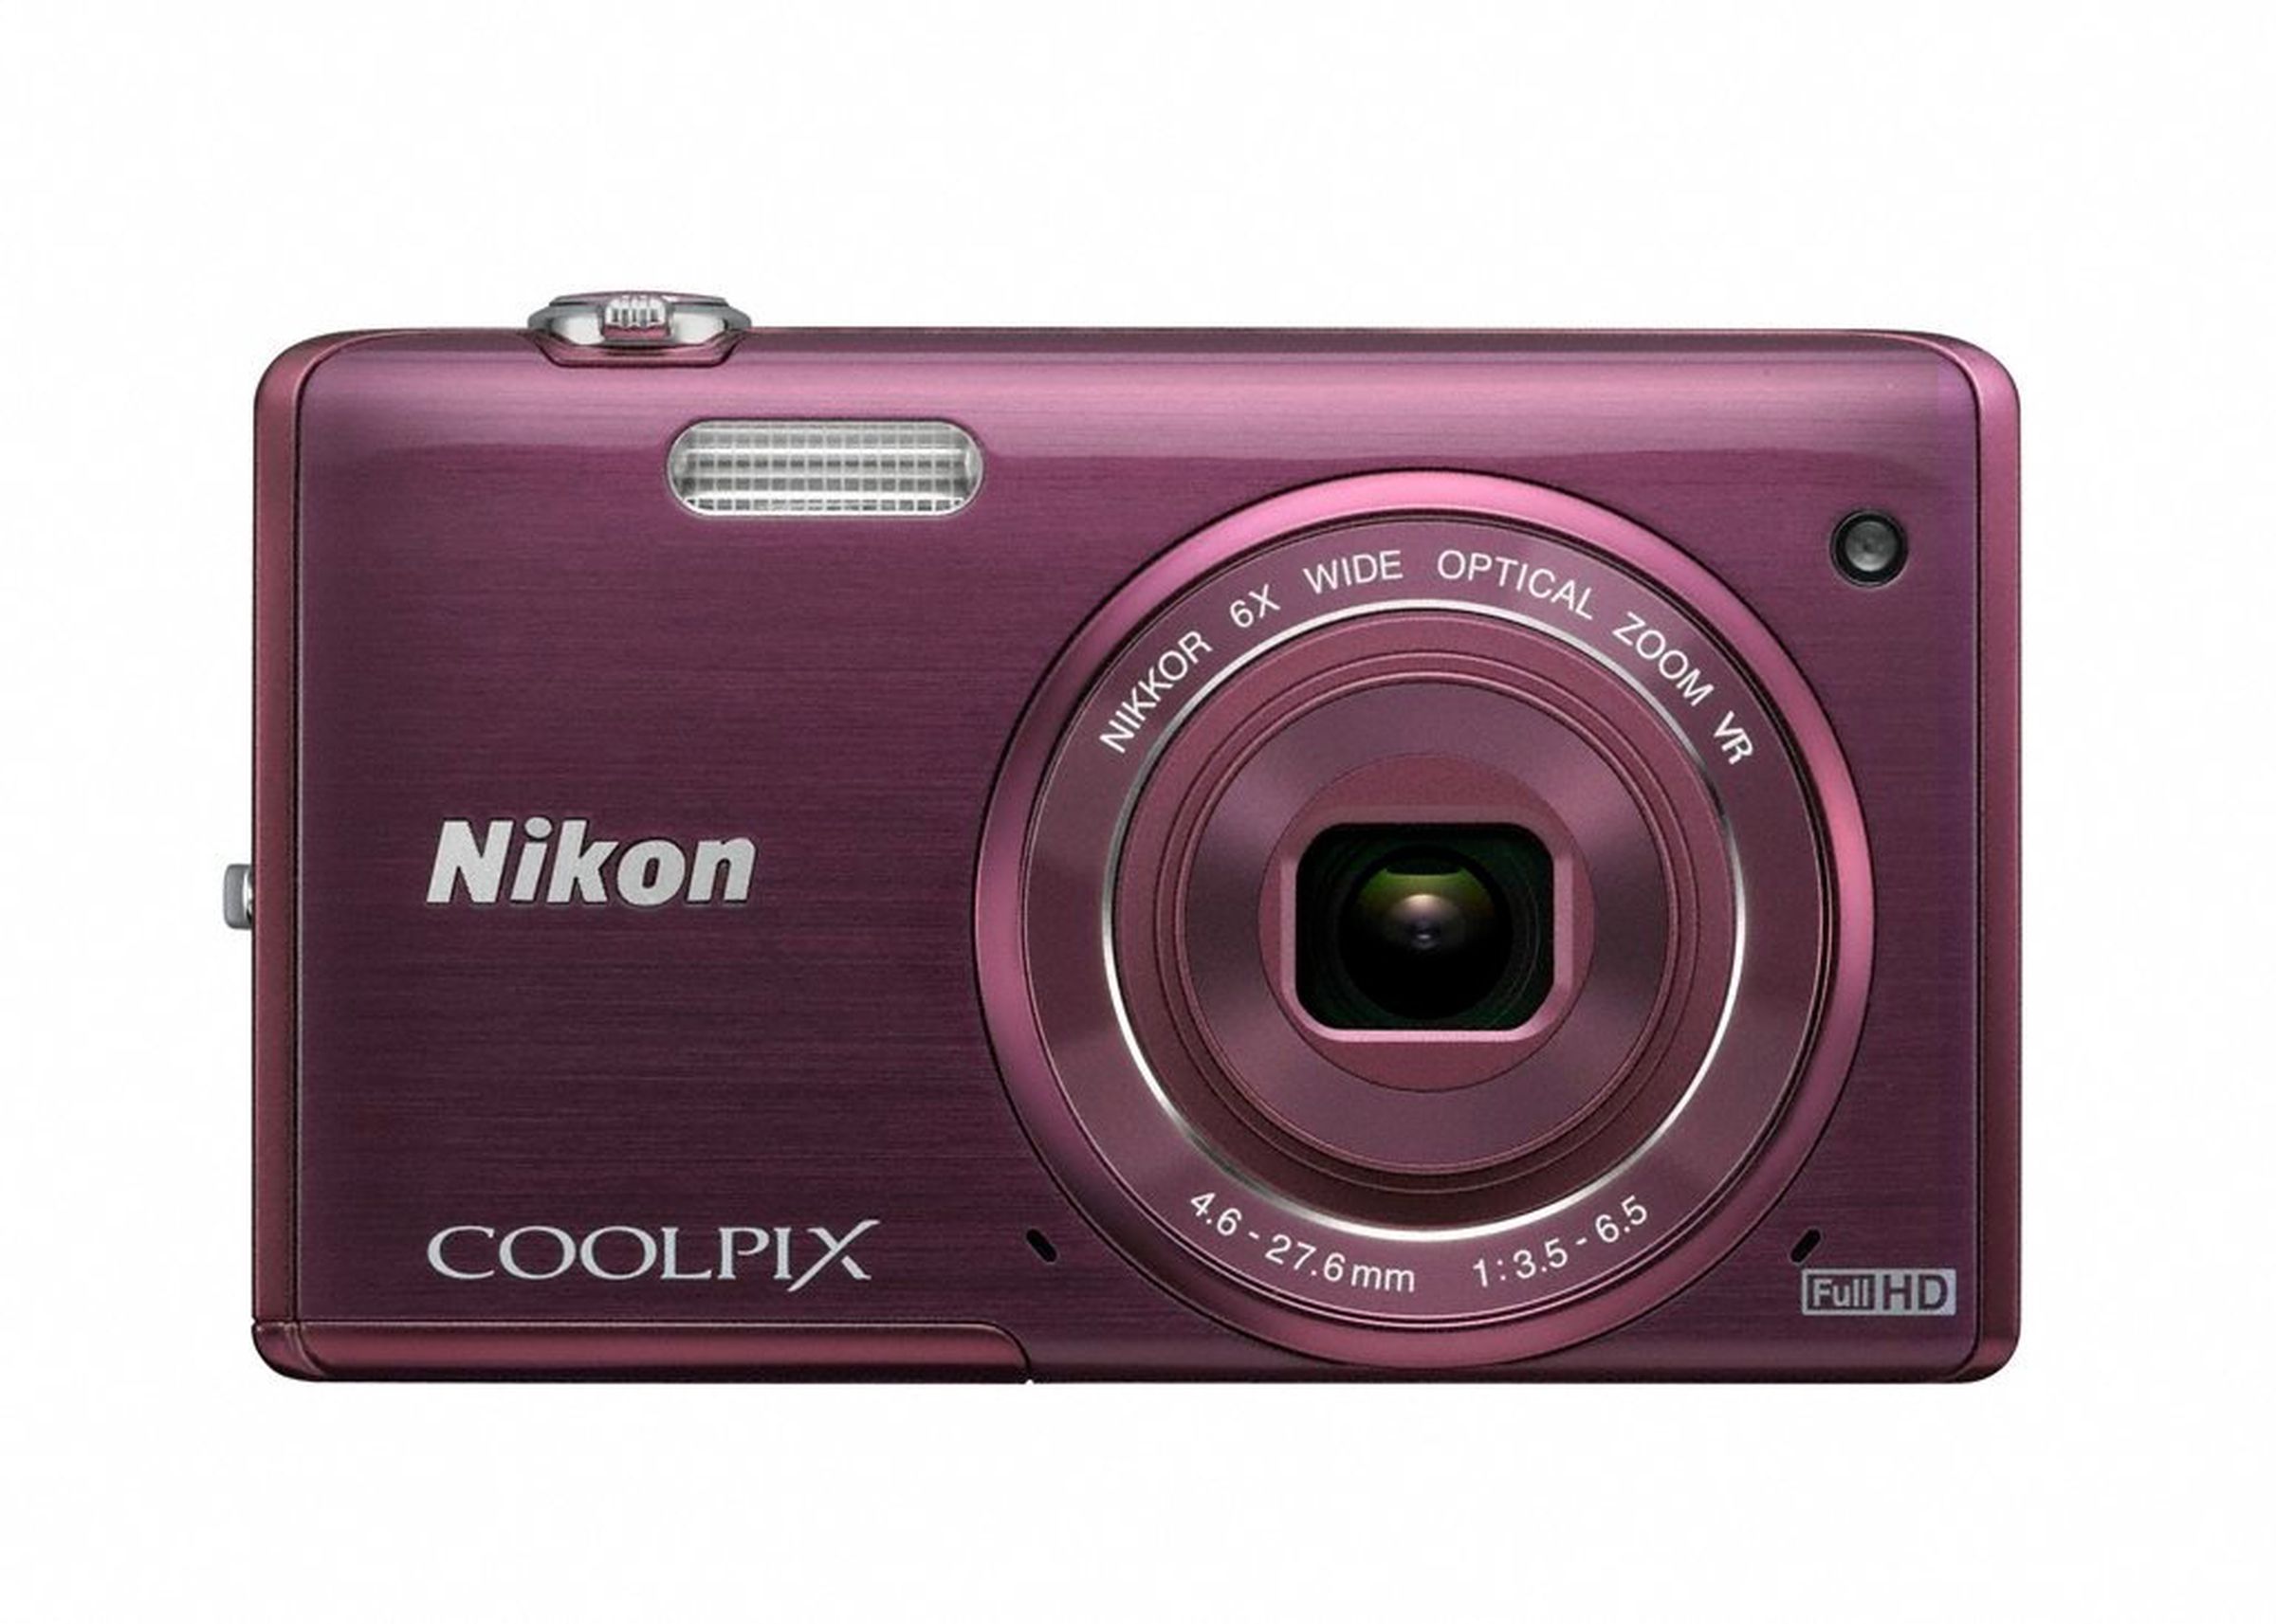 Nikon Coolpix lineup pictures